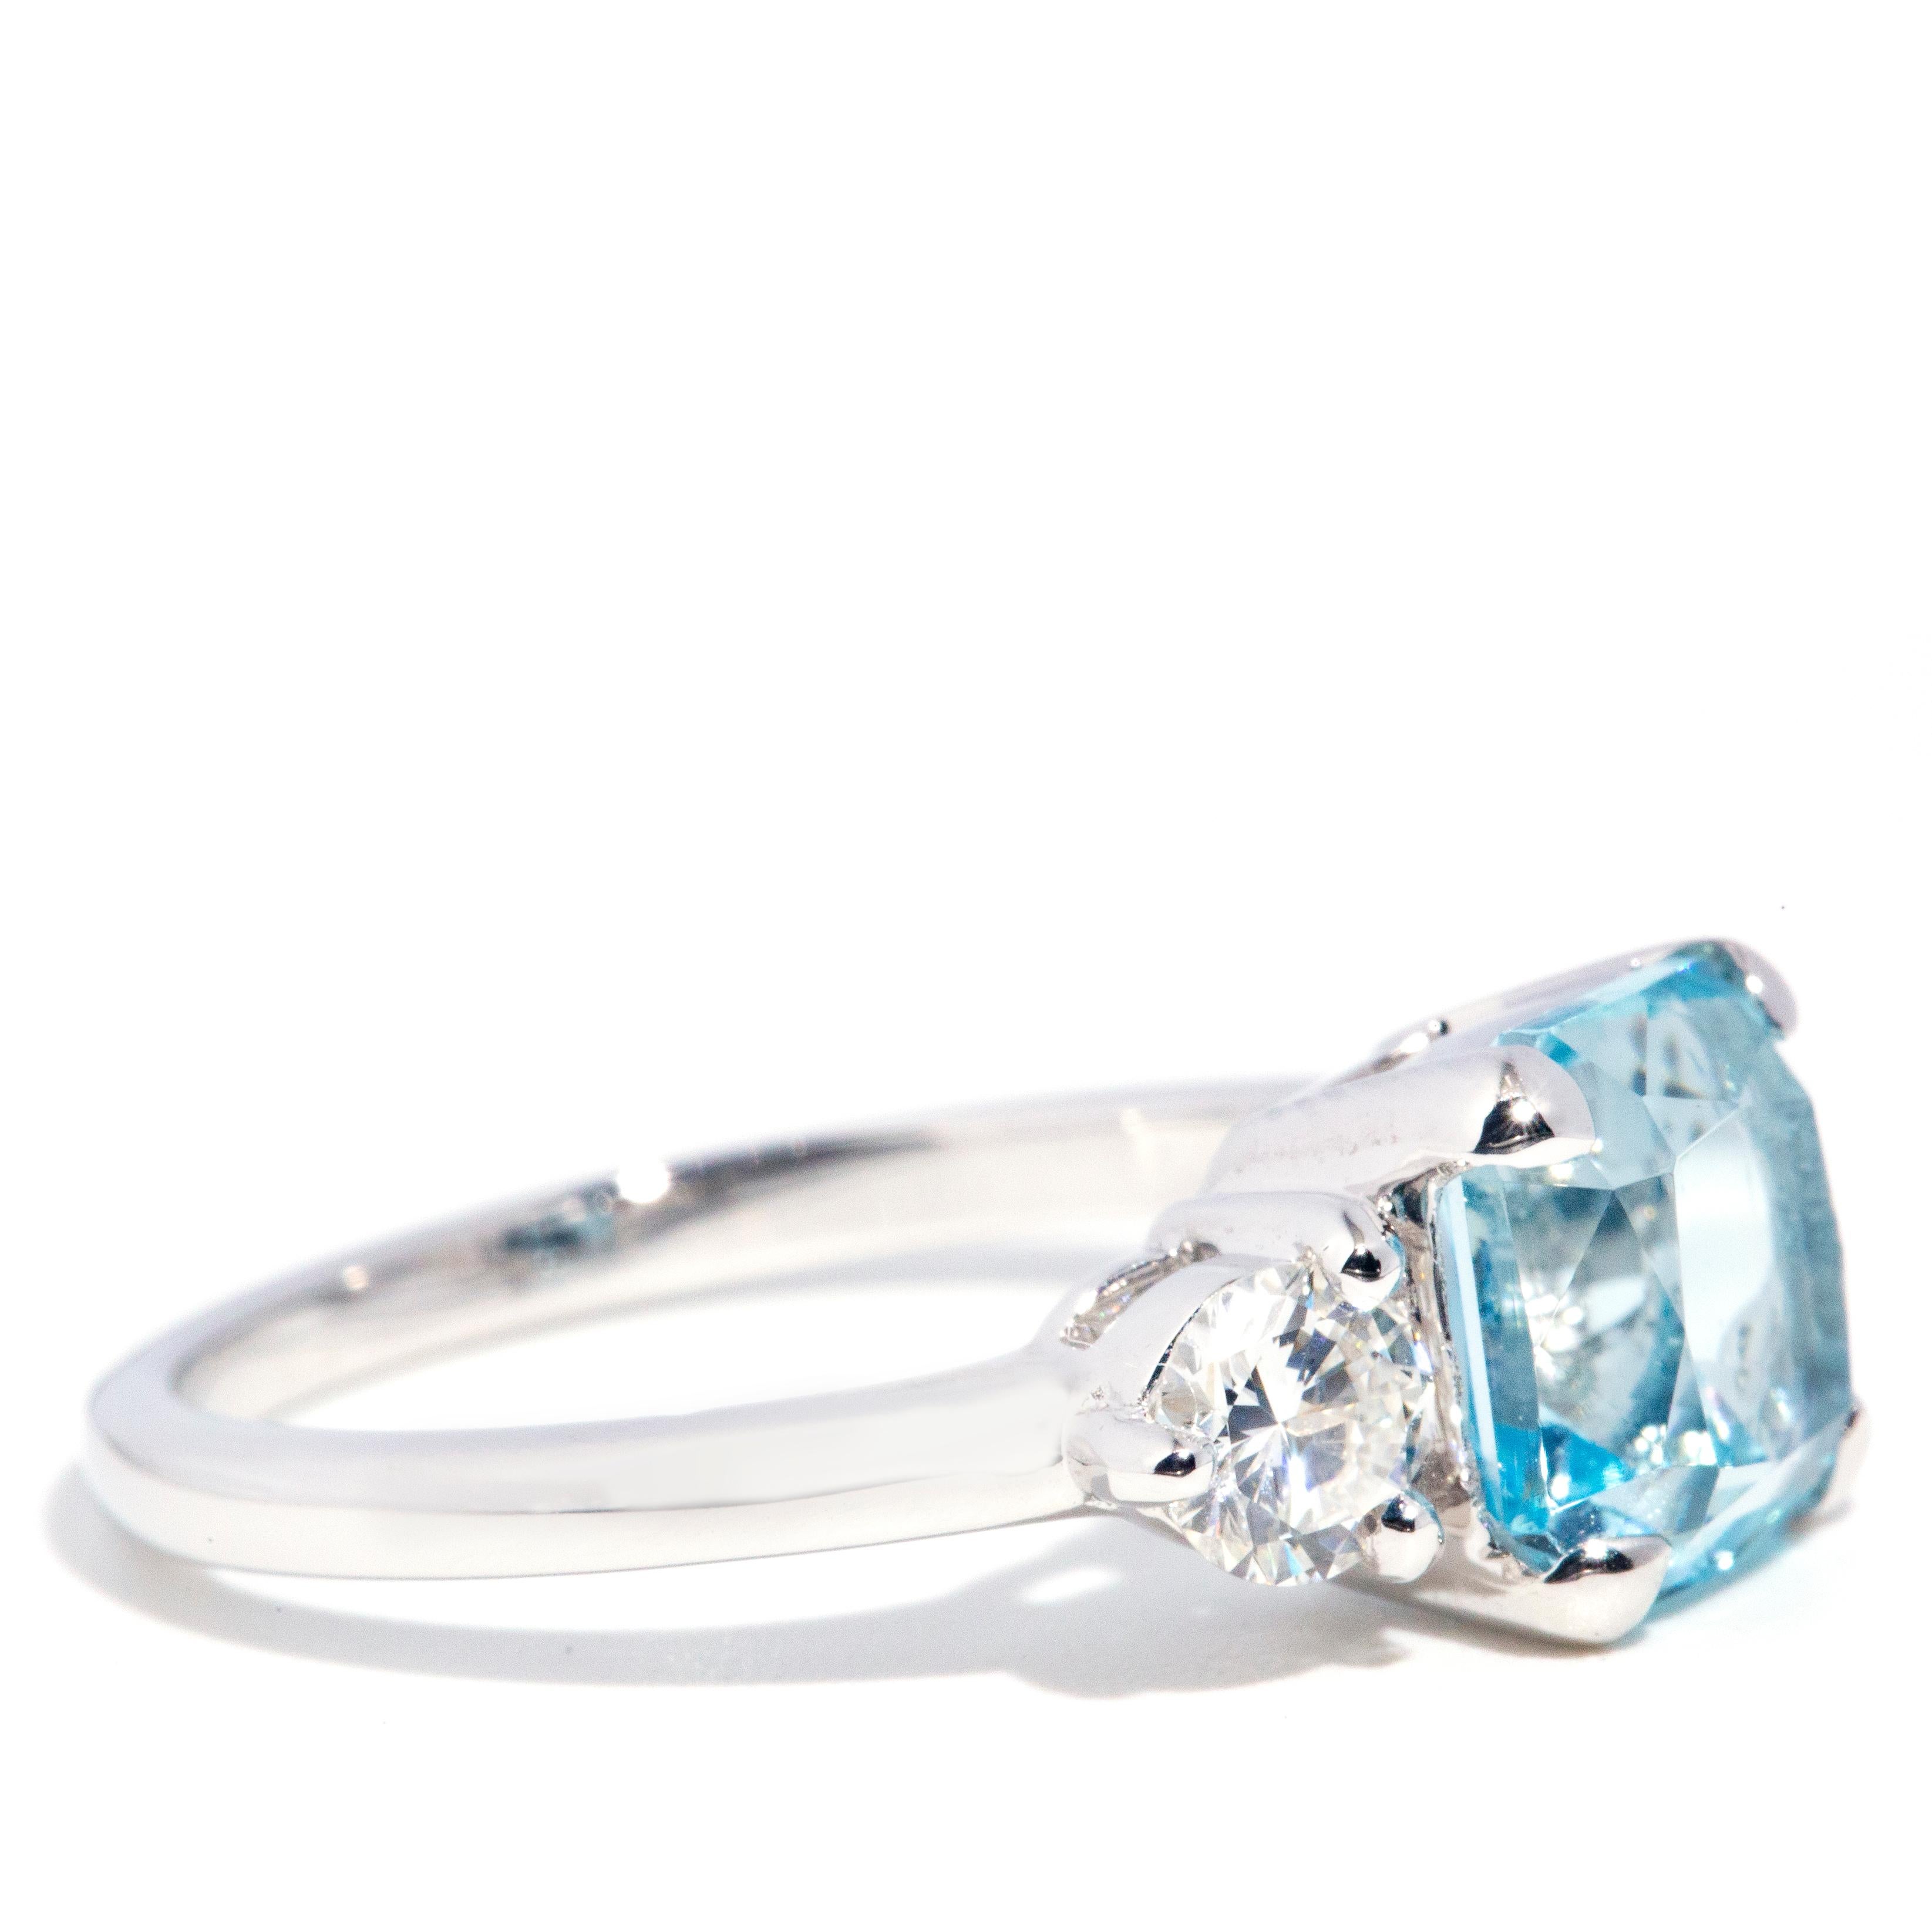 Women's 2.49 Carat Blue Aquamarine and 0.58 Carat Certified Diamond Contemporary Ring